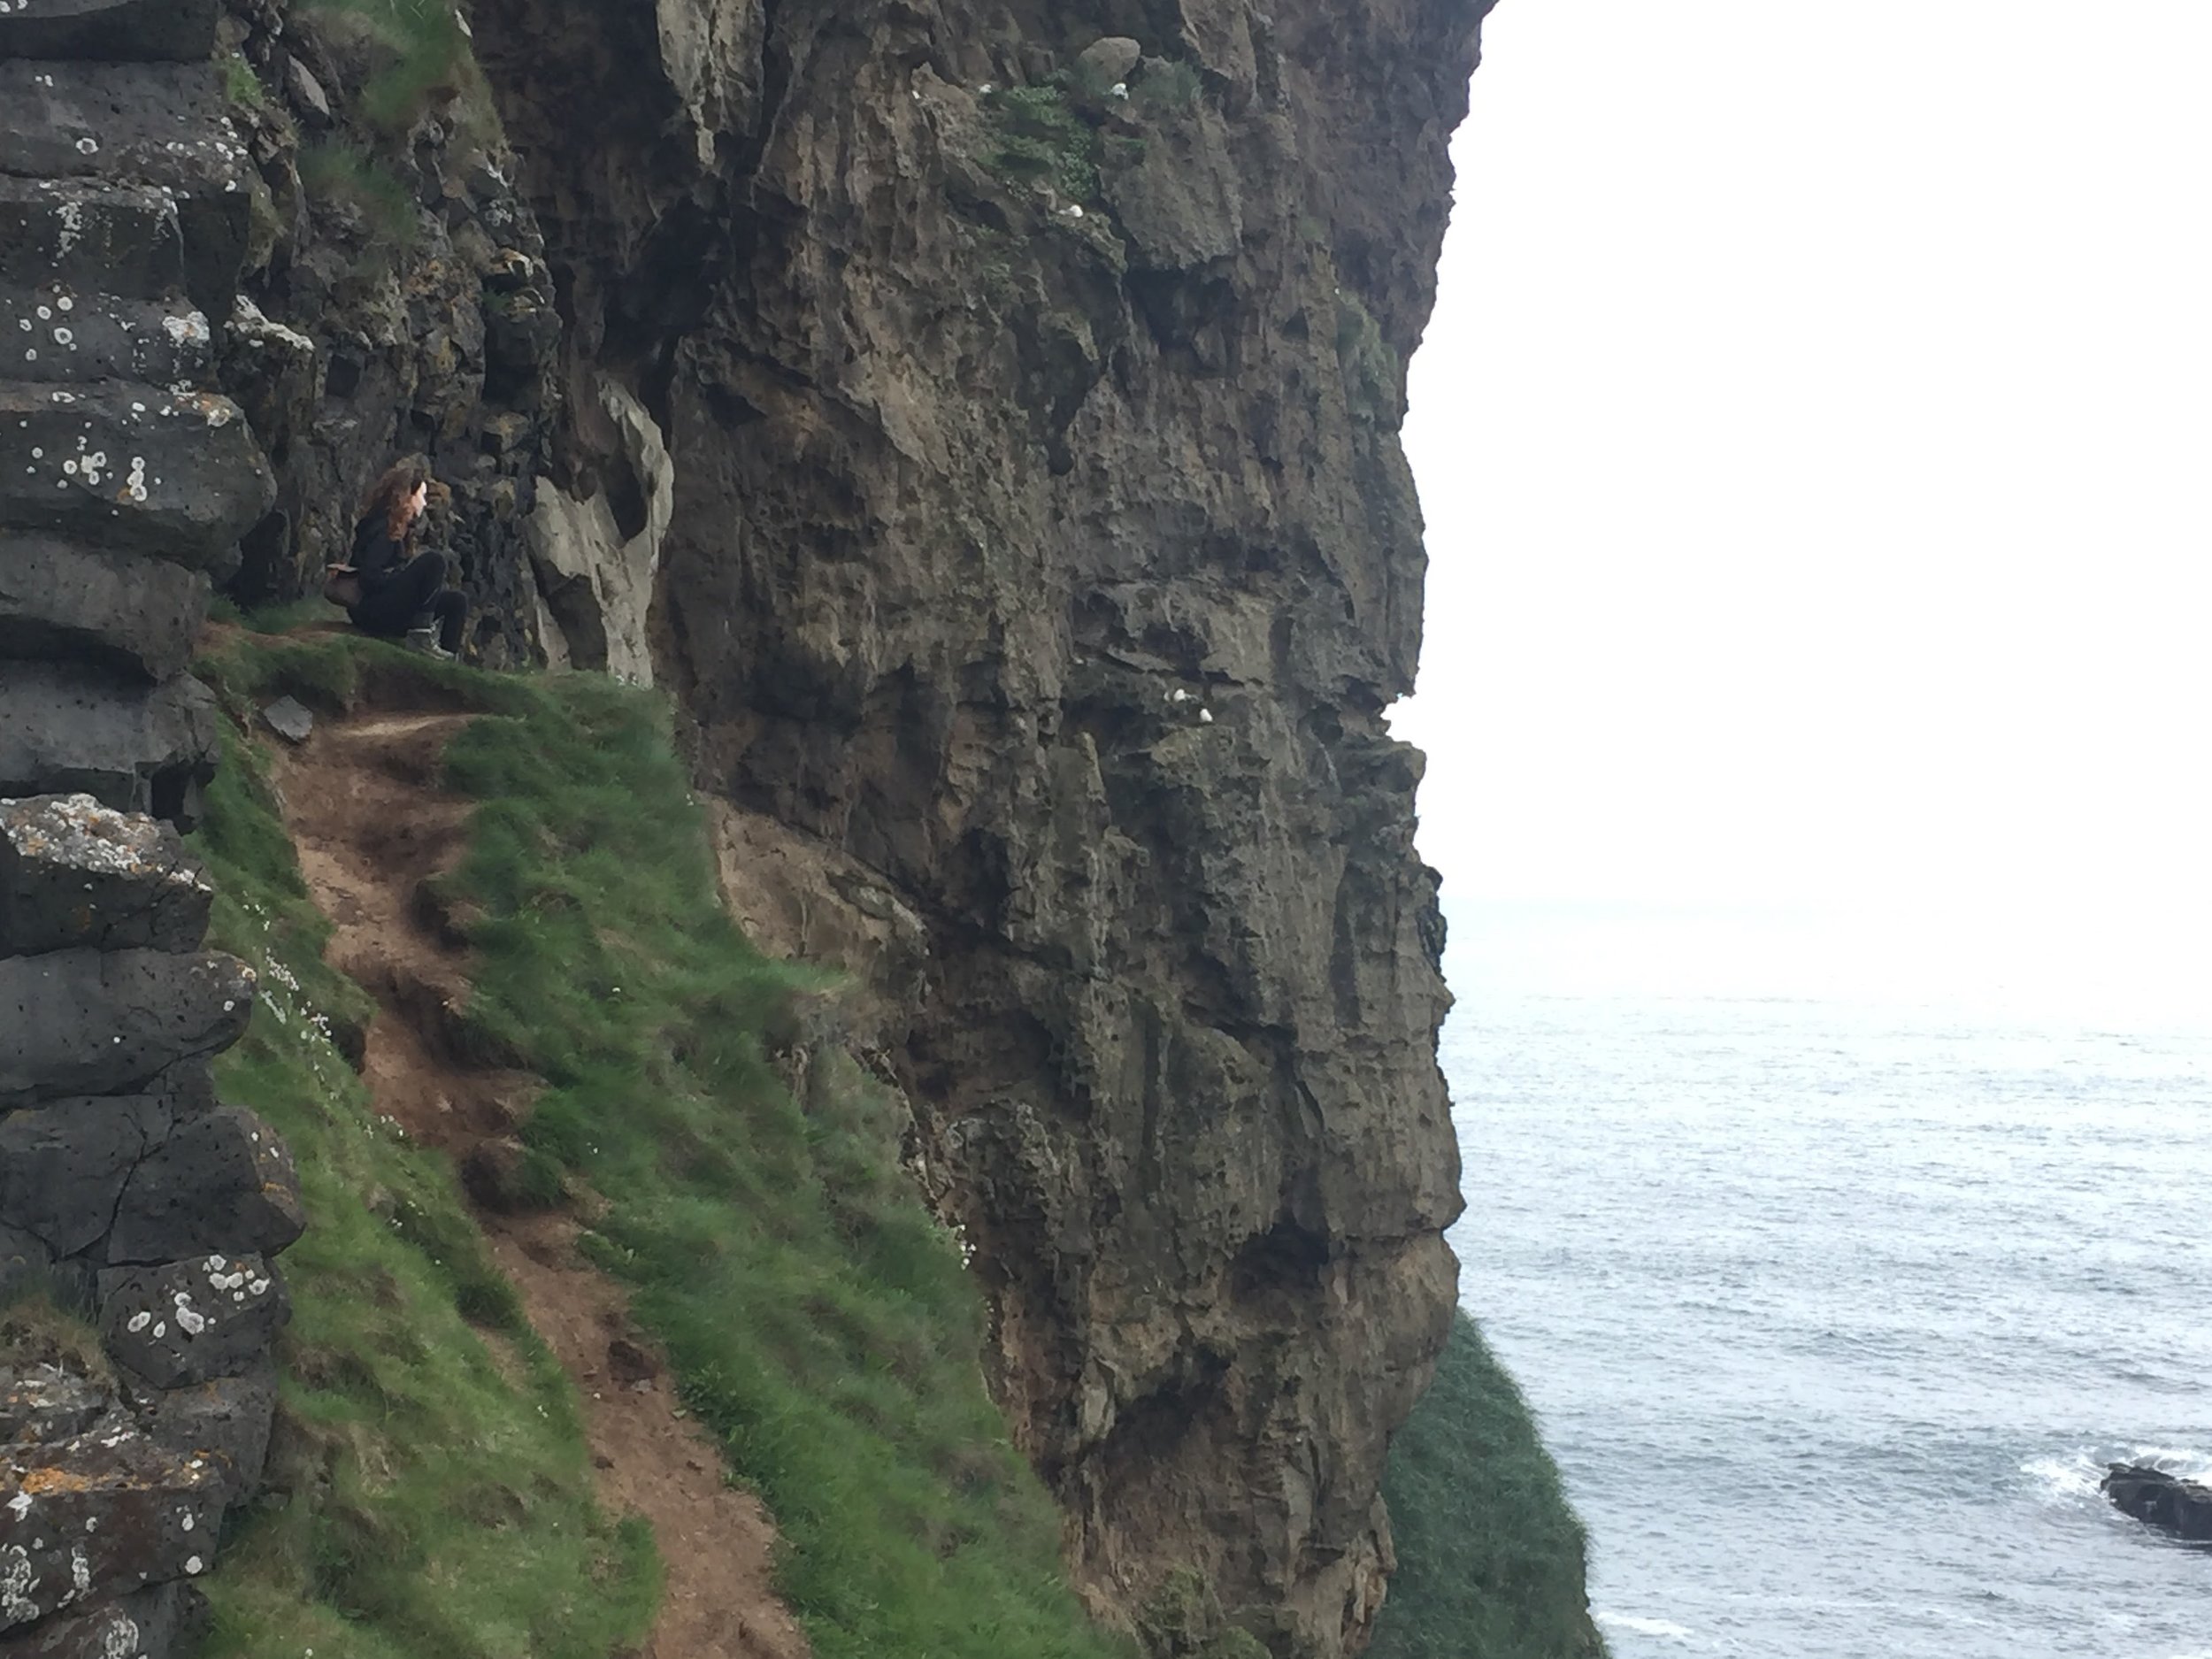 Lóndrangar basalt cliffs